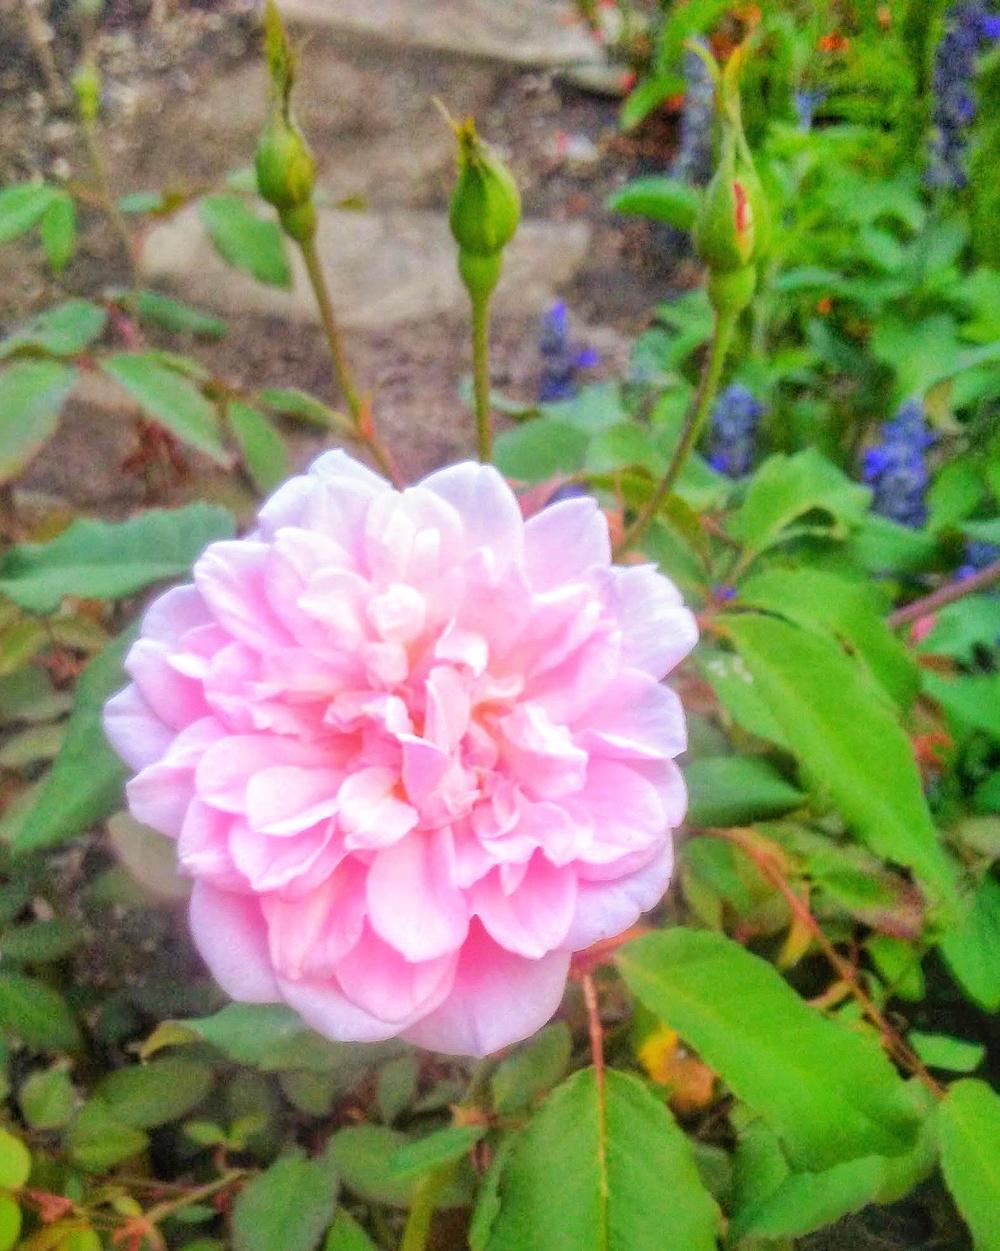 Photo of Roses (Rosa) uploaded by carlysuko